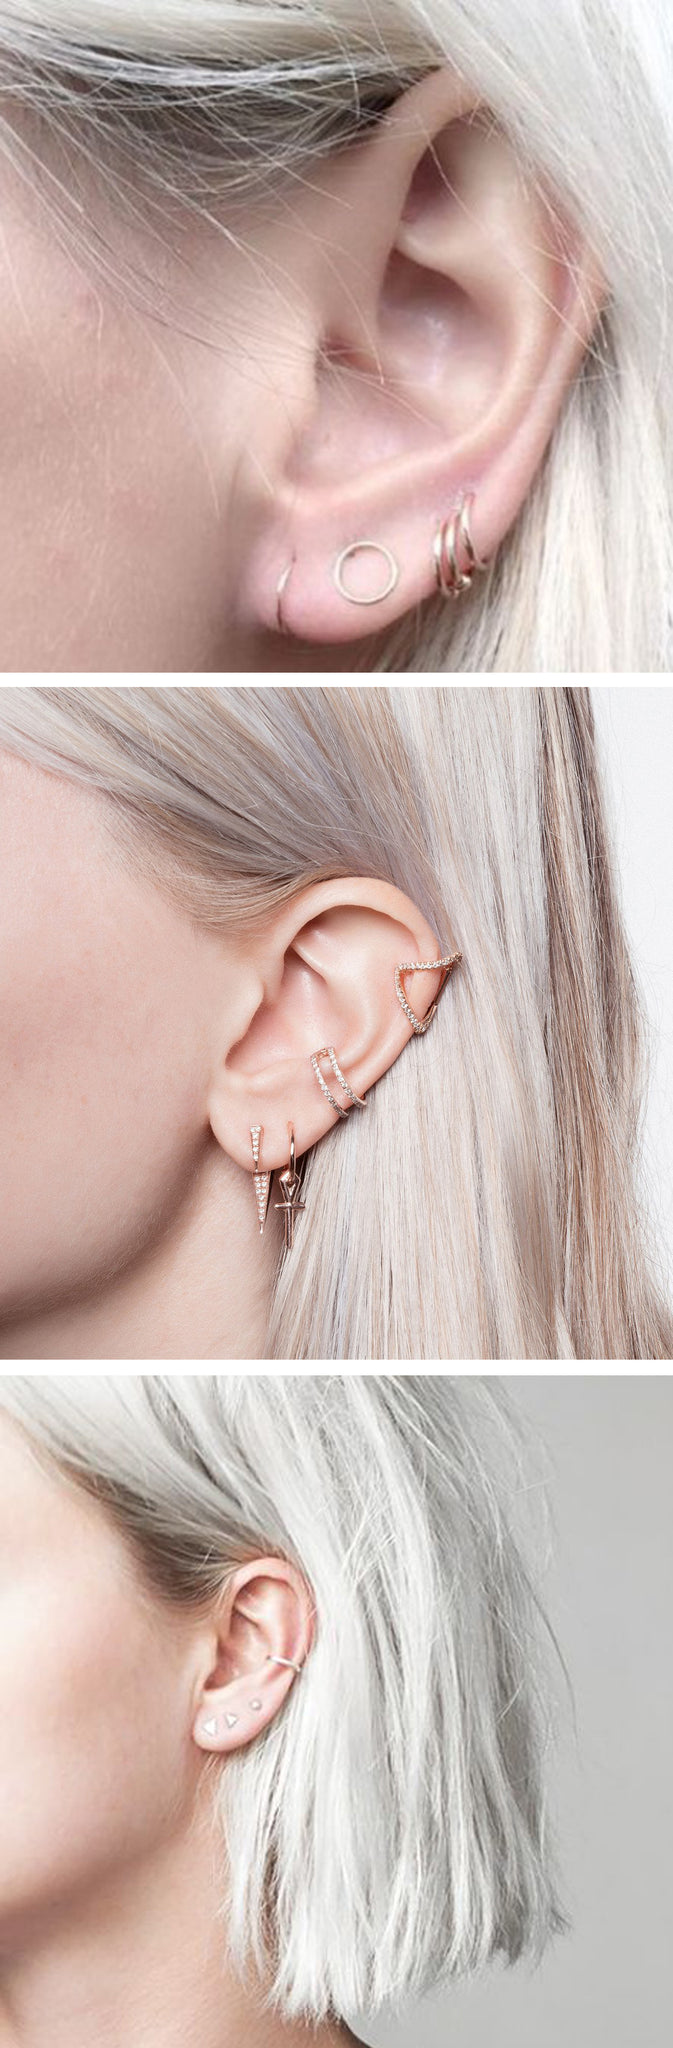 Minimalist Multiple Ear Piercing Ideas - Simple Cartilage Conch Lobe Gold Earring Ring Hoop Studs at MyBodiArt.com